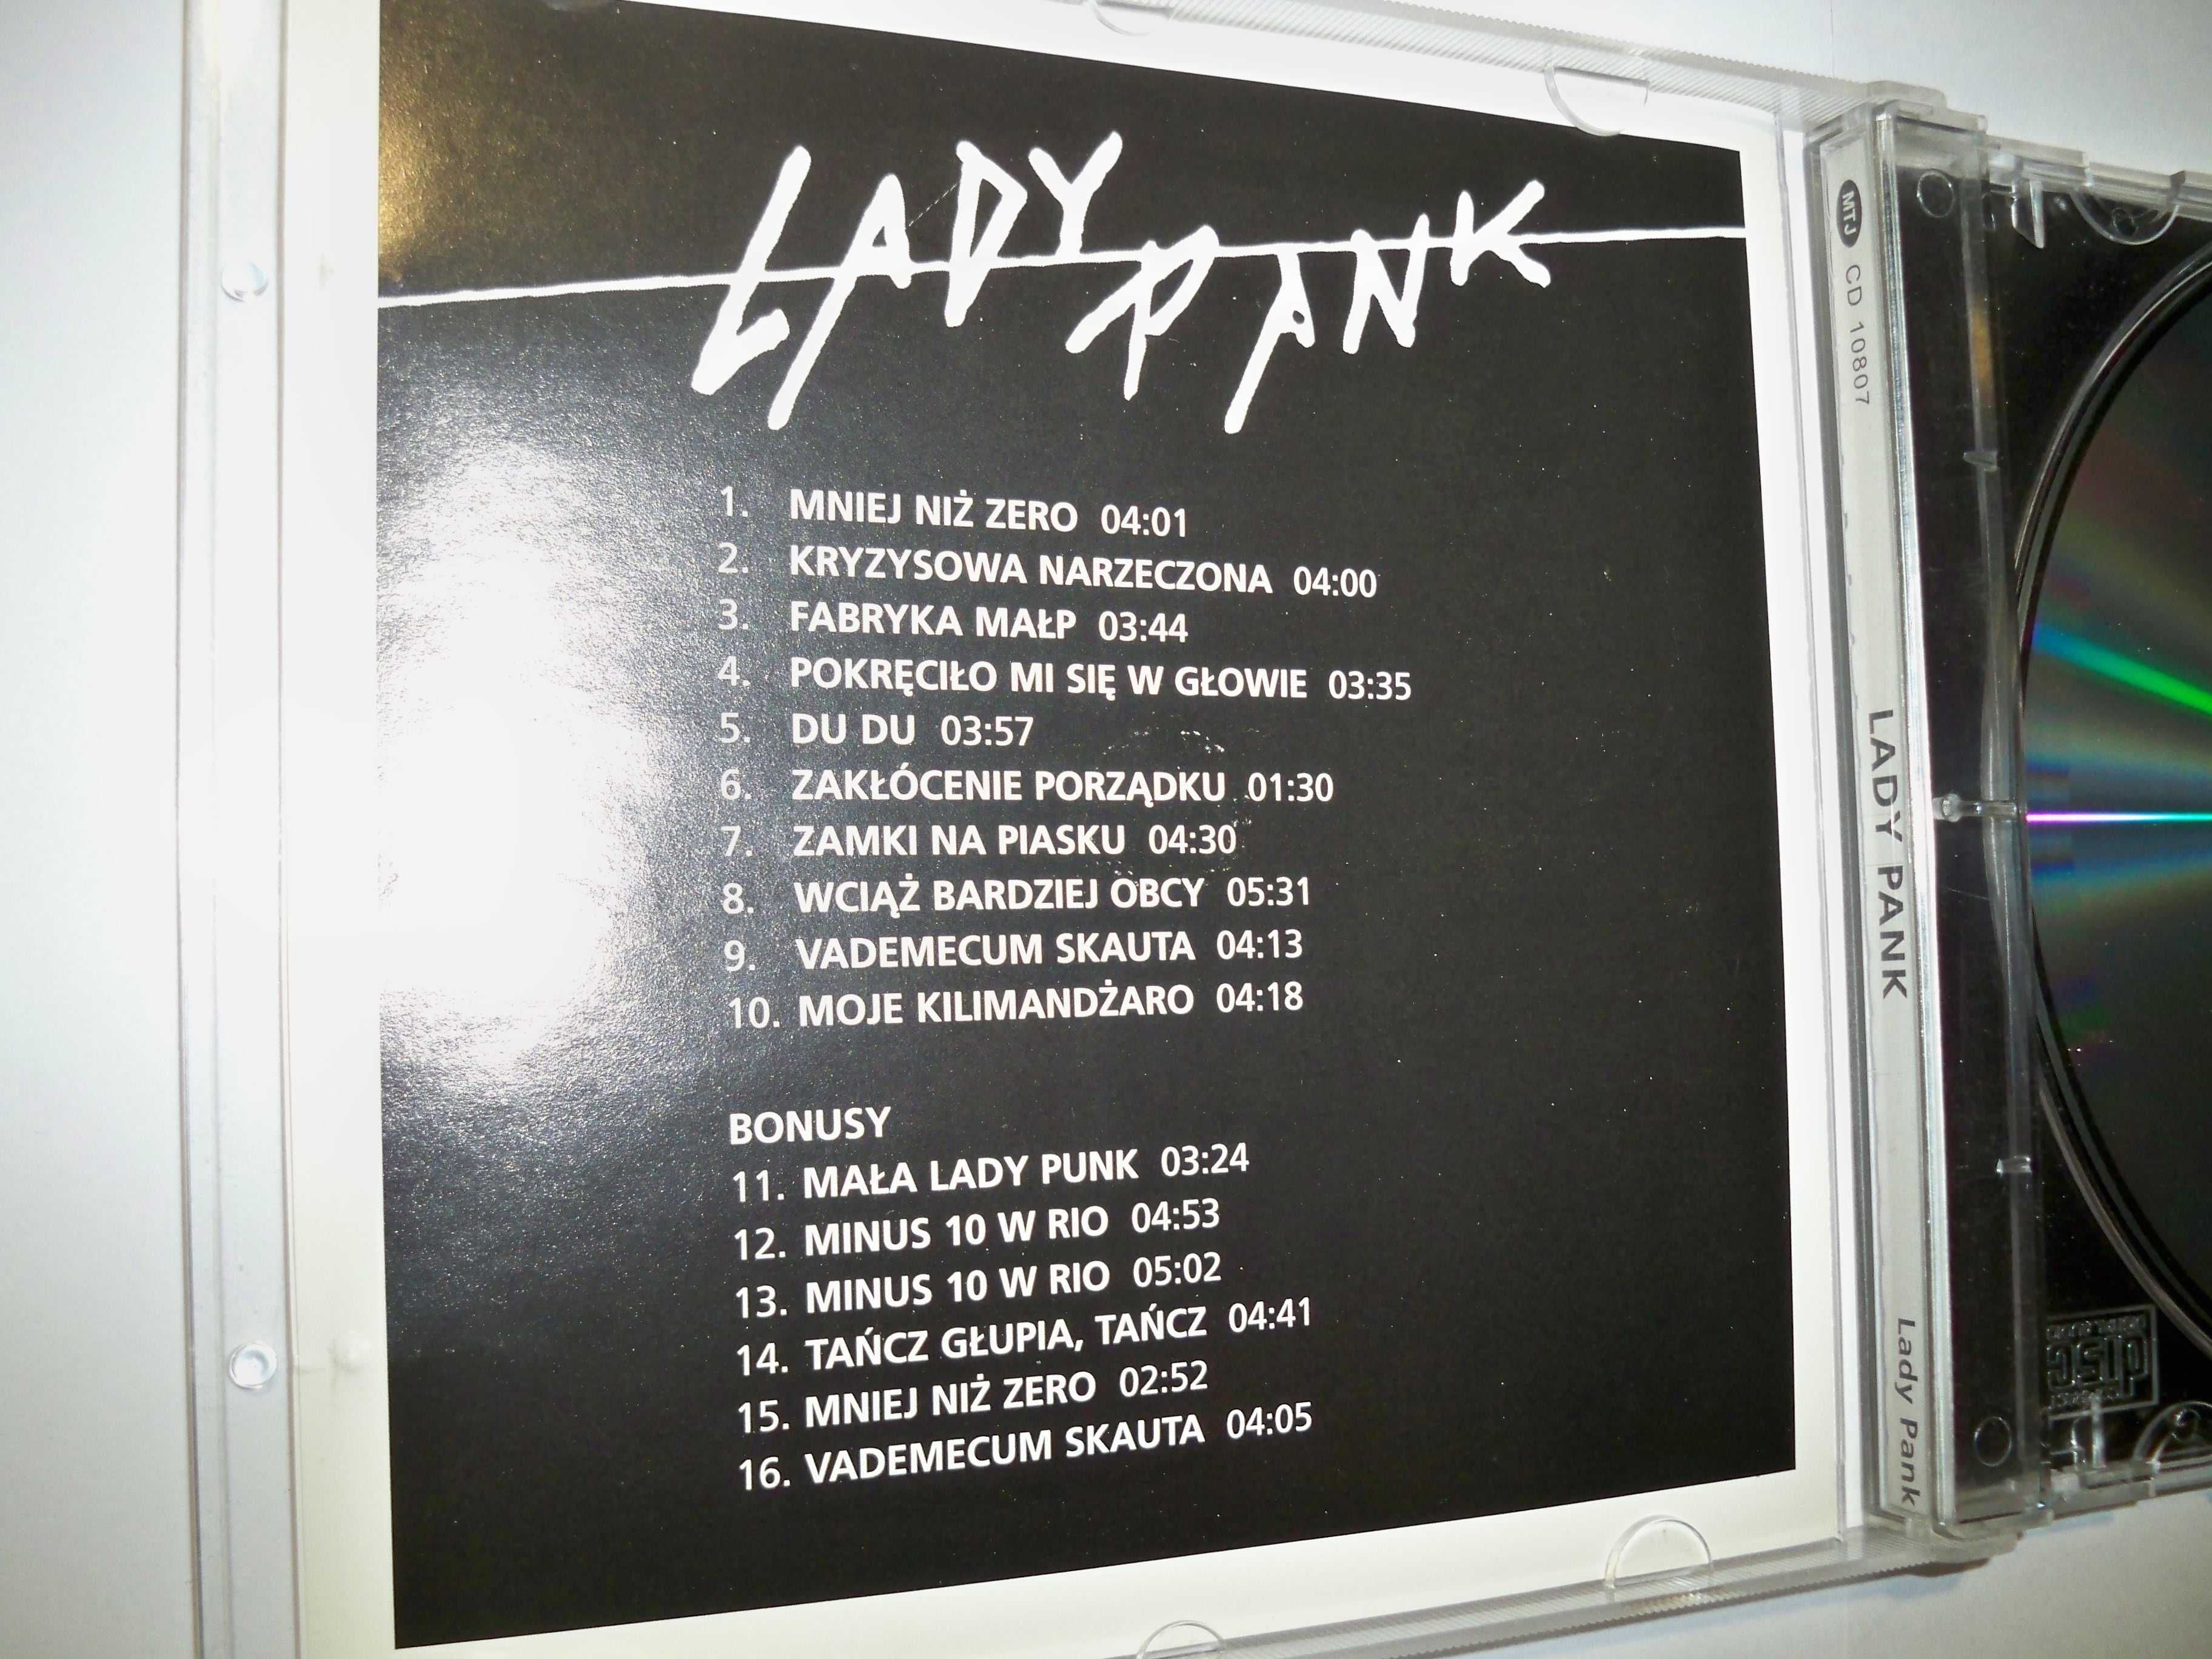 CD Lady Pank wyd. MTJ 2007 + 4 bonusy Mniej niż zero "hard" (box 13CD)